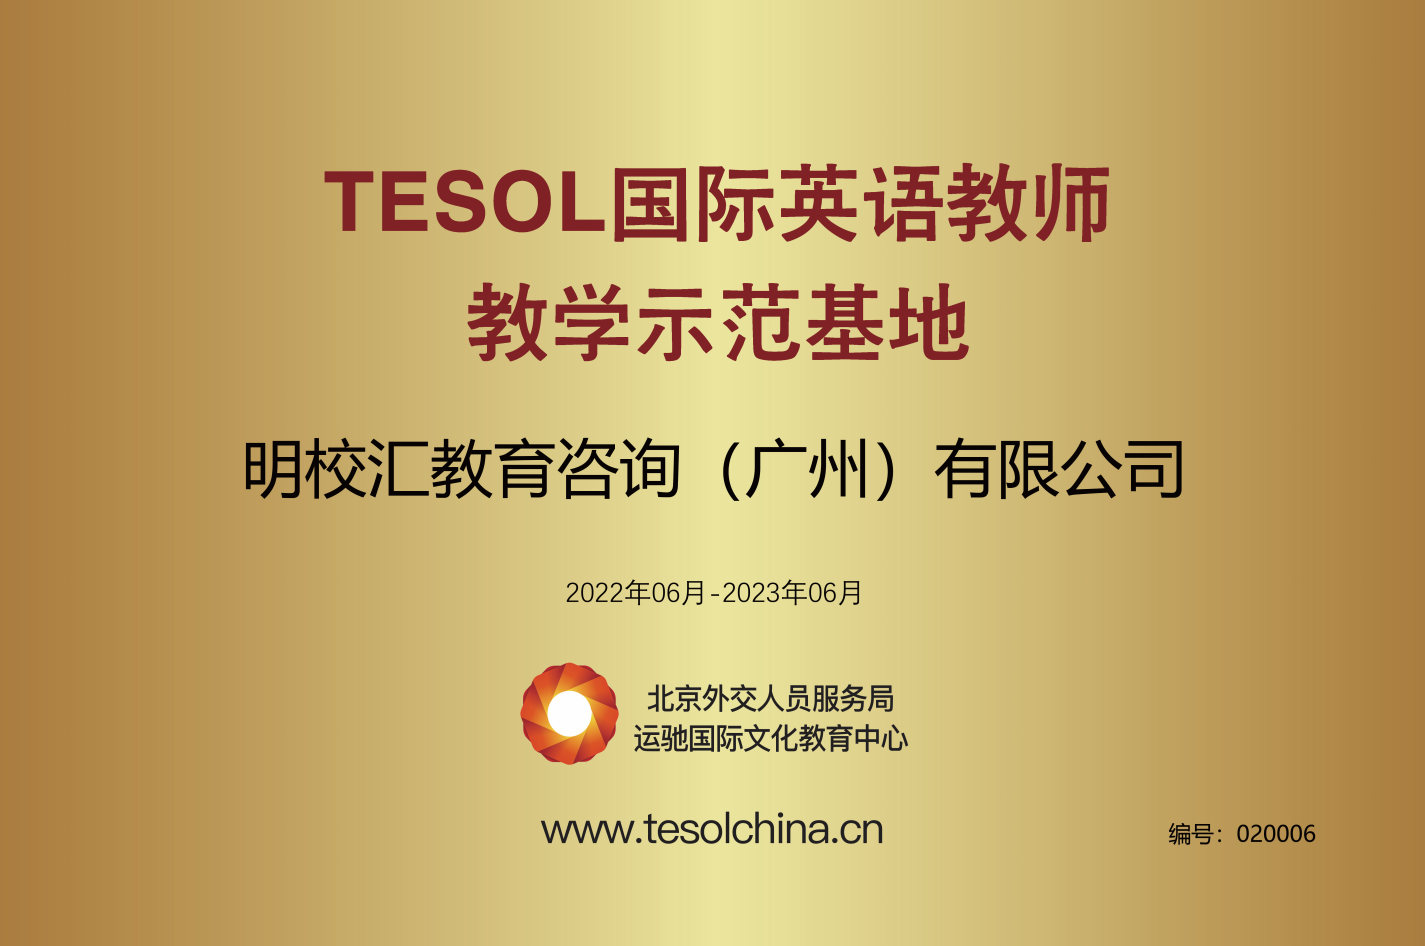 TESOL 国际英语教师高级资格证书项目